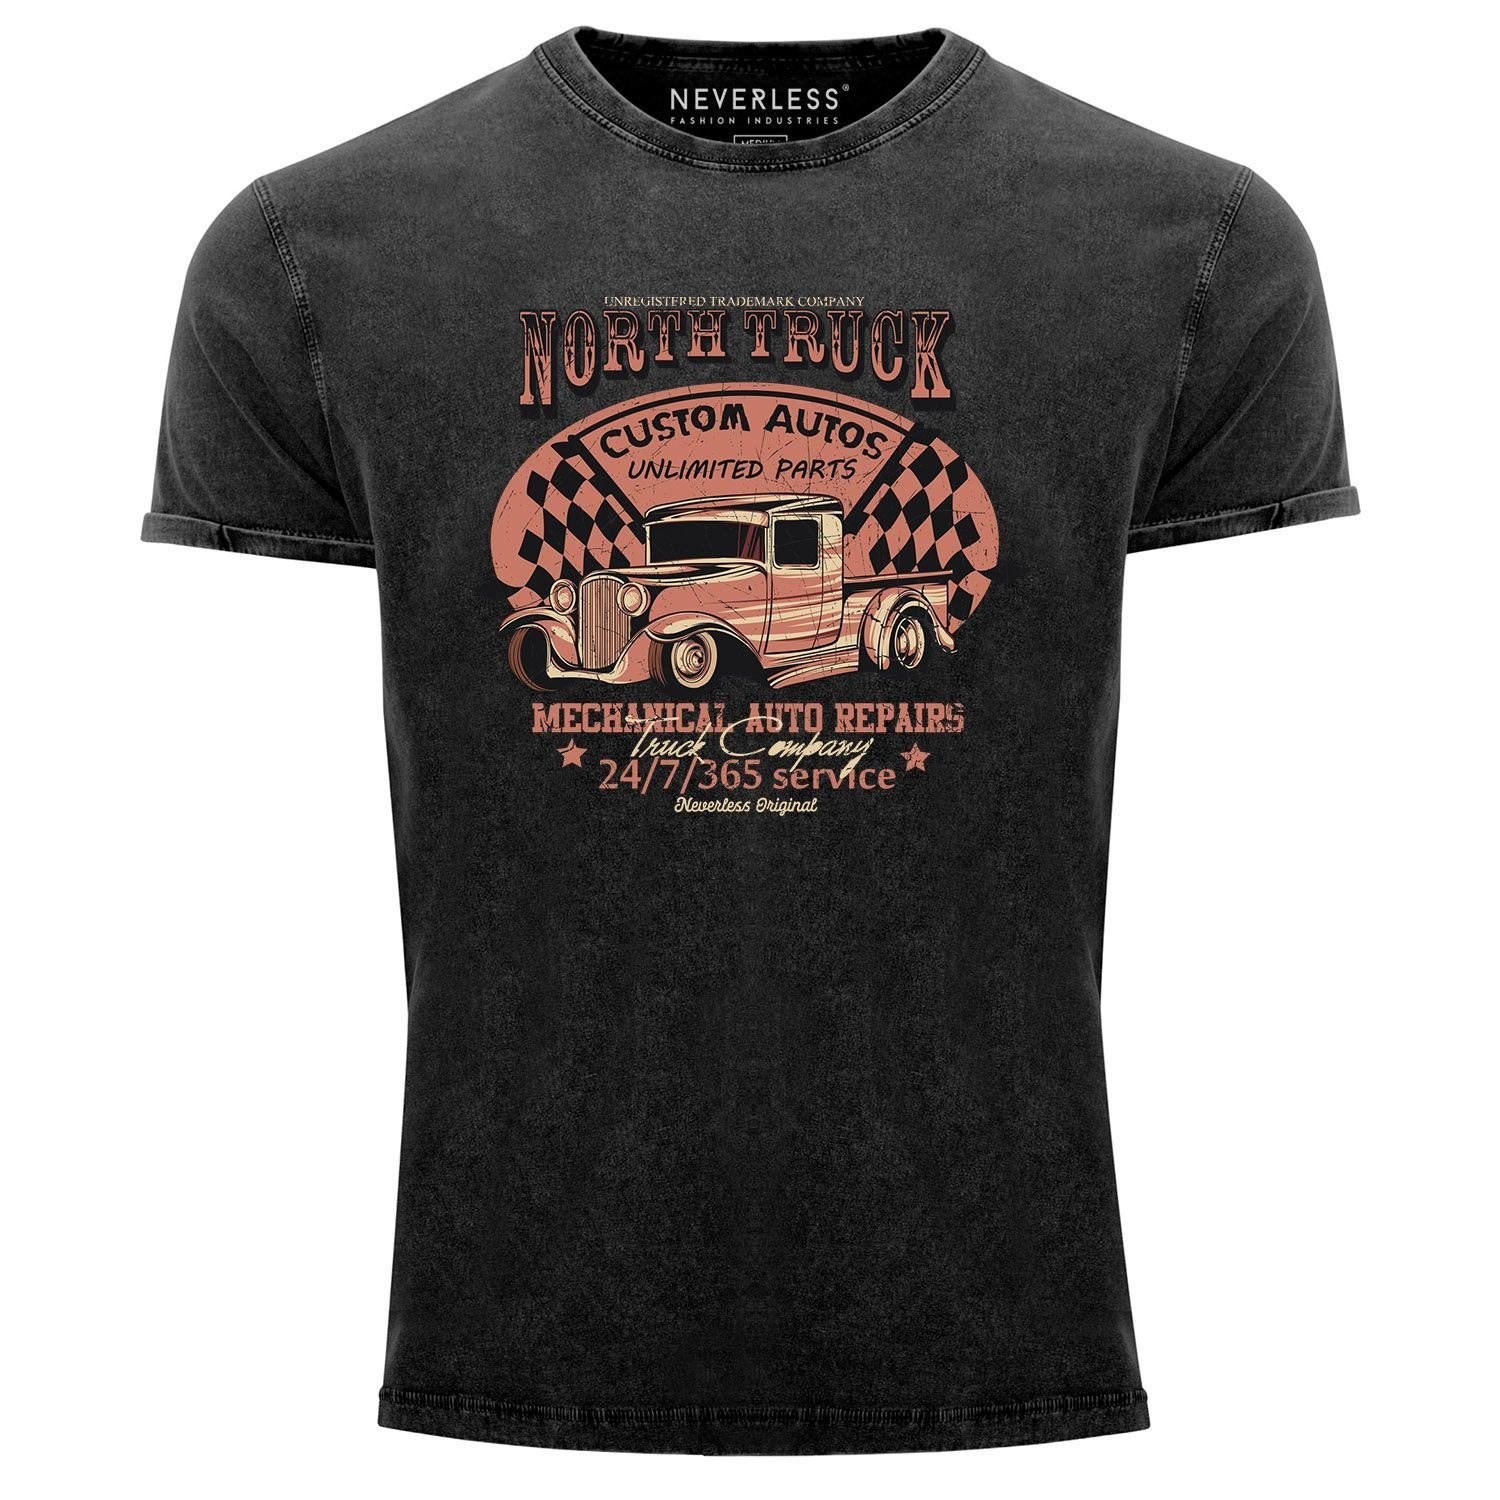 Neverless Print-Shirt Neverless® Herren T-Shirt Vintage Shirt Printshirt Hot Rod Big Block Car Tuning V8 Vintage Truck Aufdruck Used Look Slim Fit mit Print